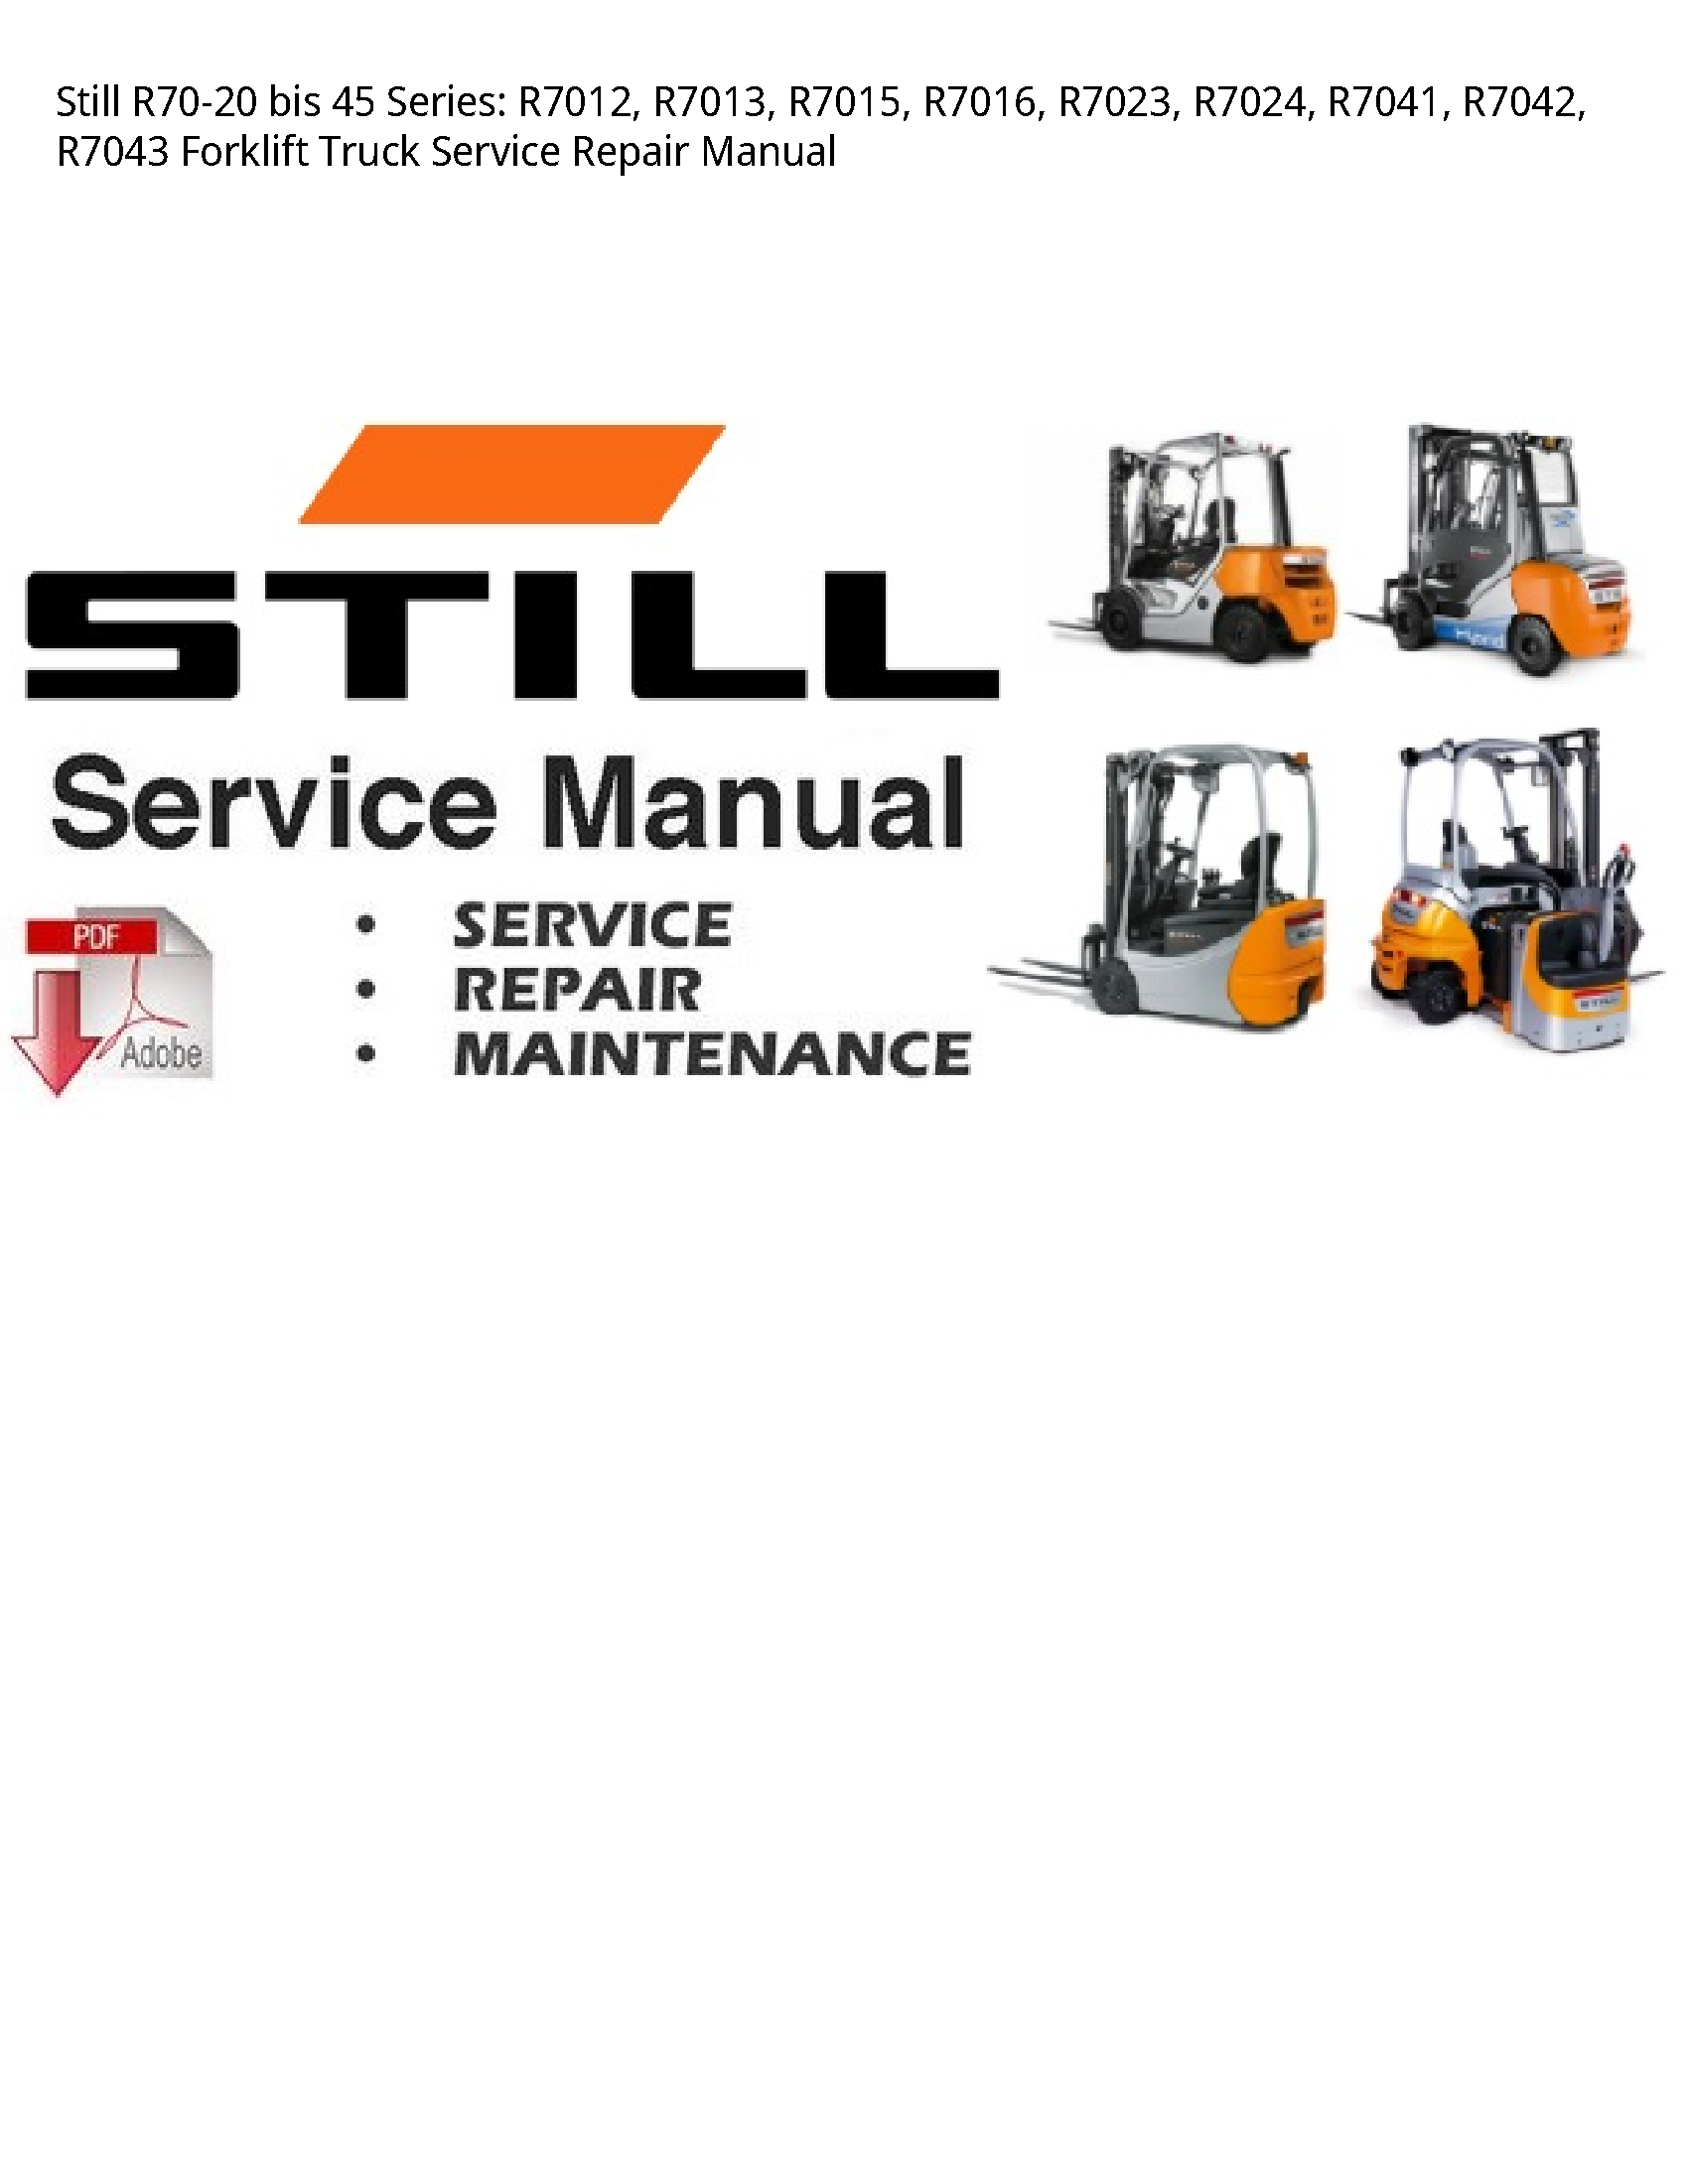 Still R70-20 bis Series: Forklift Truck manual